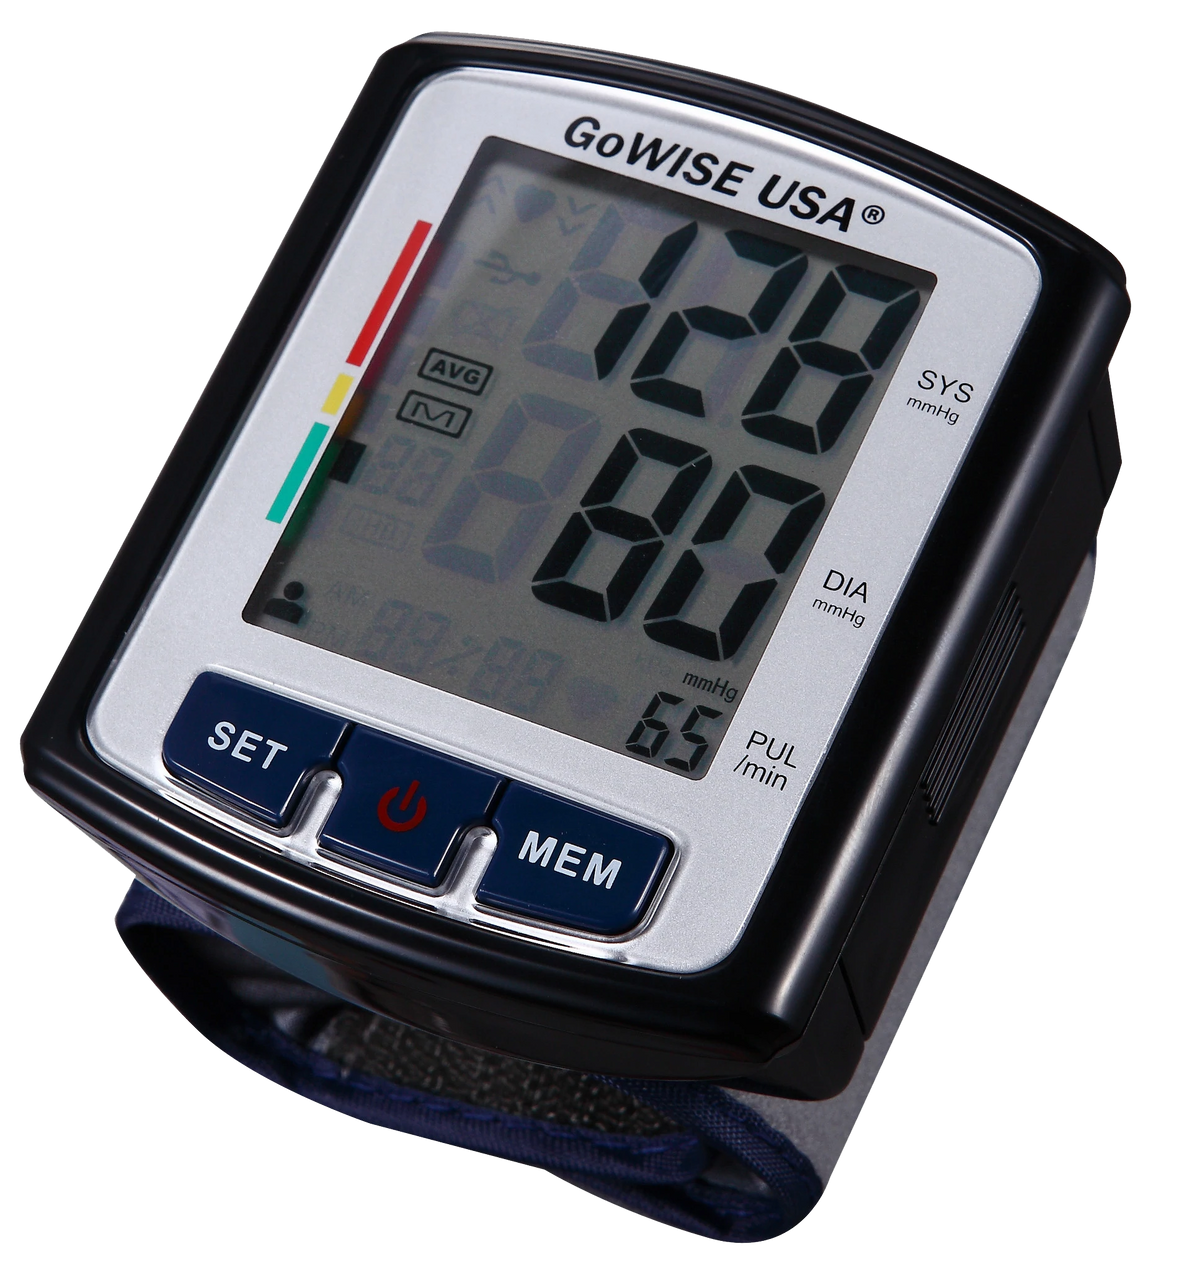 Digital Wrist Blood Pressure Monitor w/ Hypertension Risk Indicator, GW22059